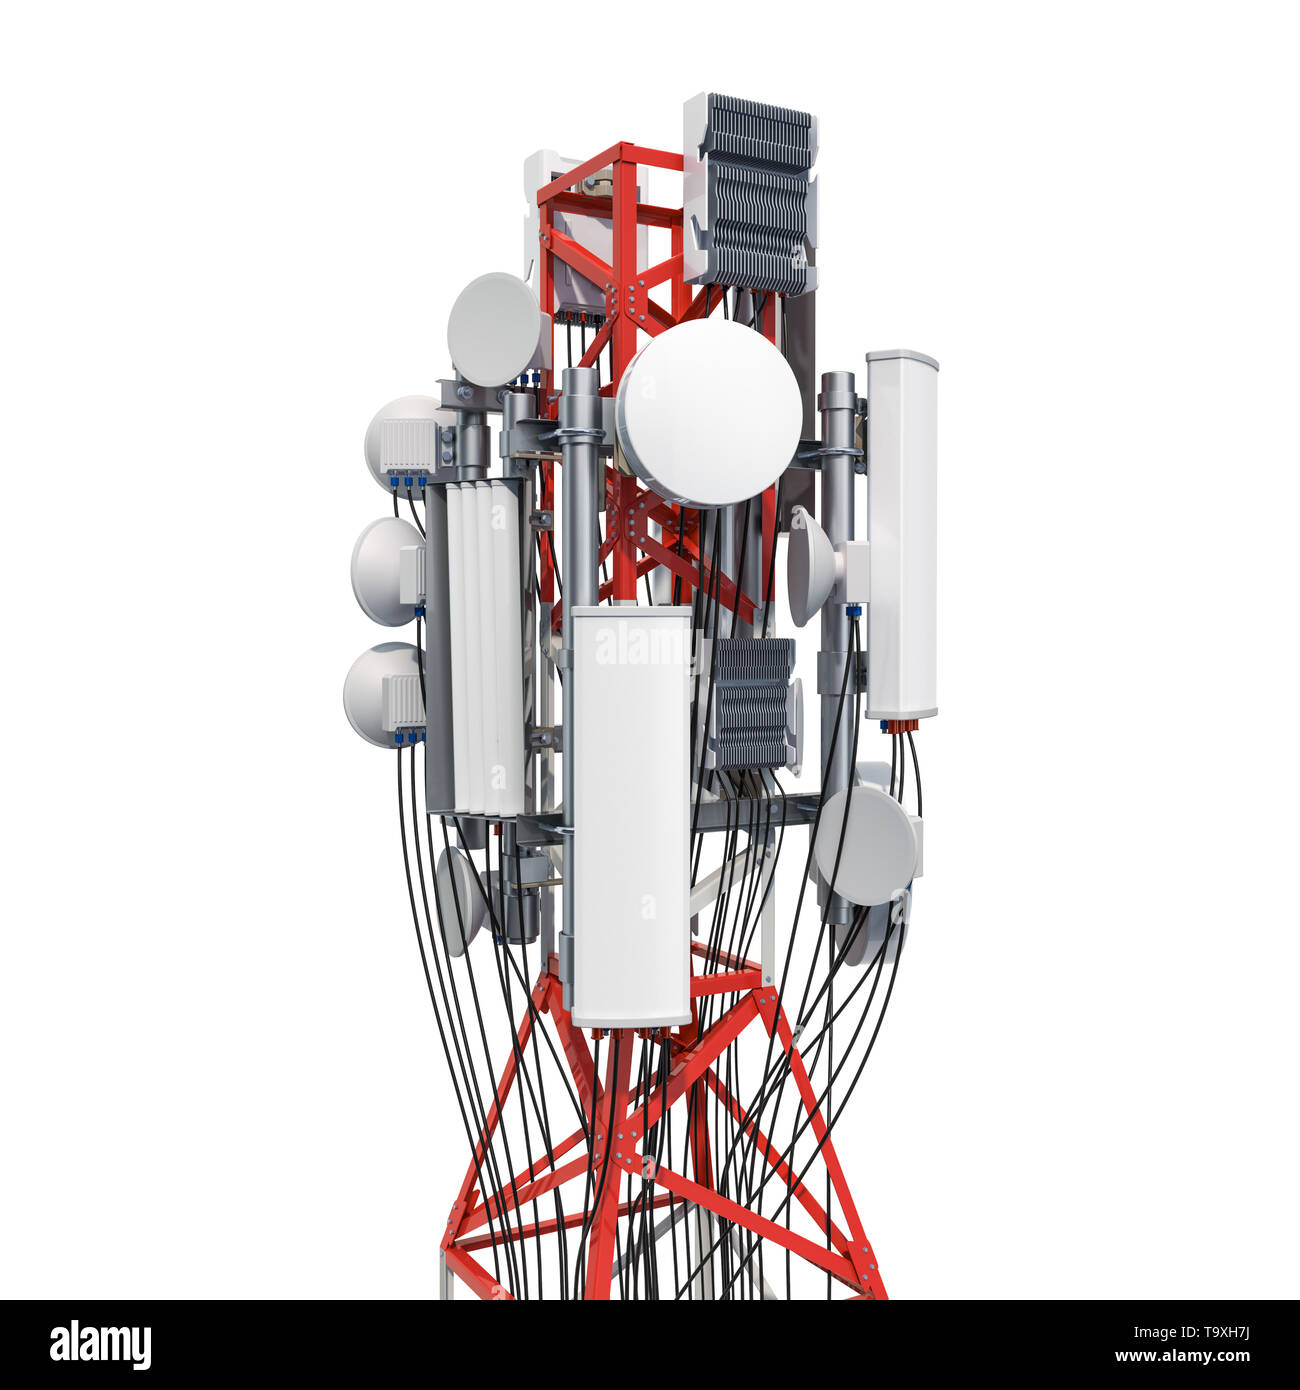 https://c8.alamy.com/compes/t9xh7j/torre-movil-con-antenas-de-telefonia-celular-la-torre-de-la-antena-3d-rendering-aislado-sobre-fondo-blanco-t9xh7j.jpg